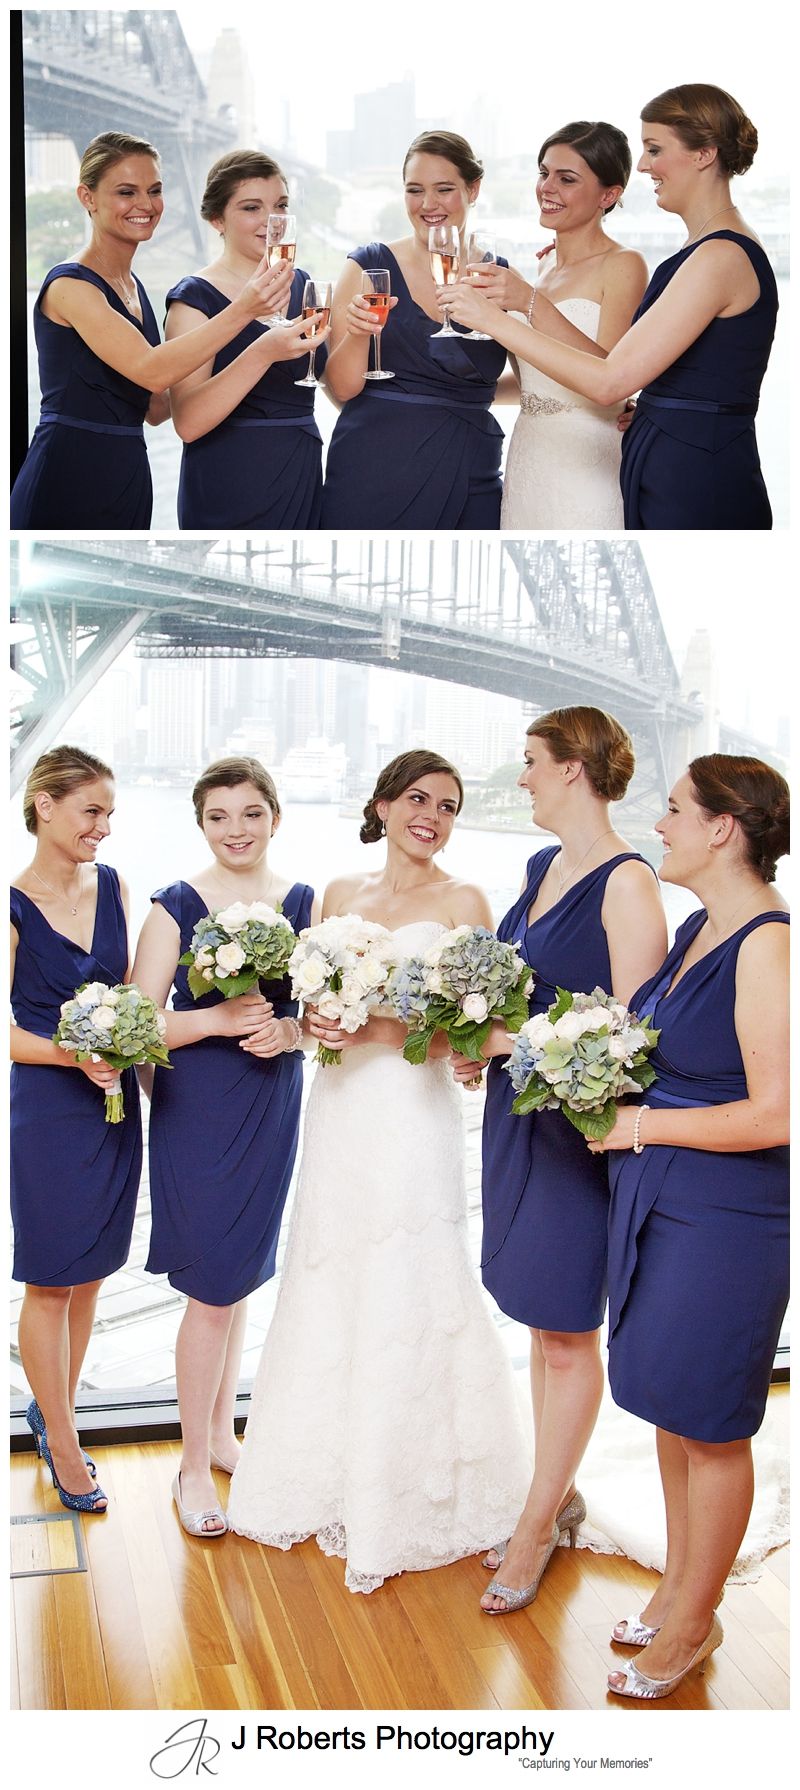 Bride celebrating with bridesmaids in blue - sydney wedding photography